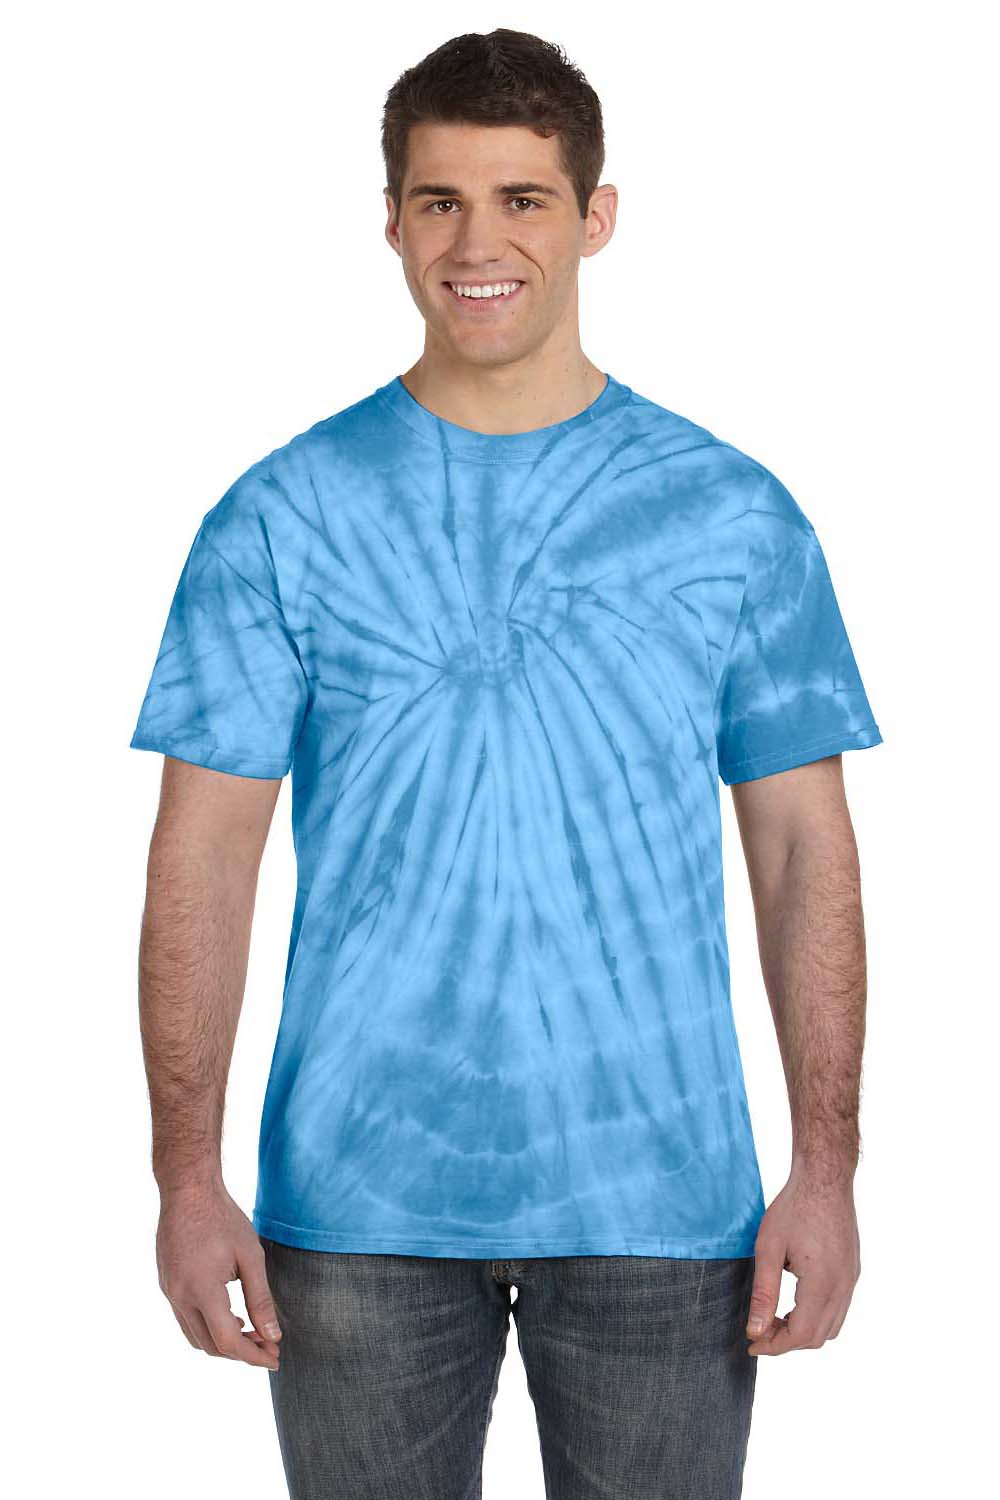 Tie-Dye CD101 Mens Short Sleeve Crewneck T-Shirt Turquoise Blue Front